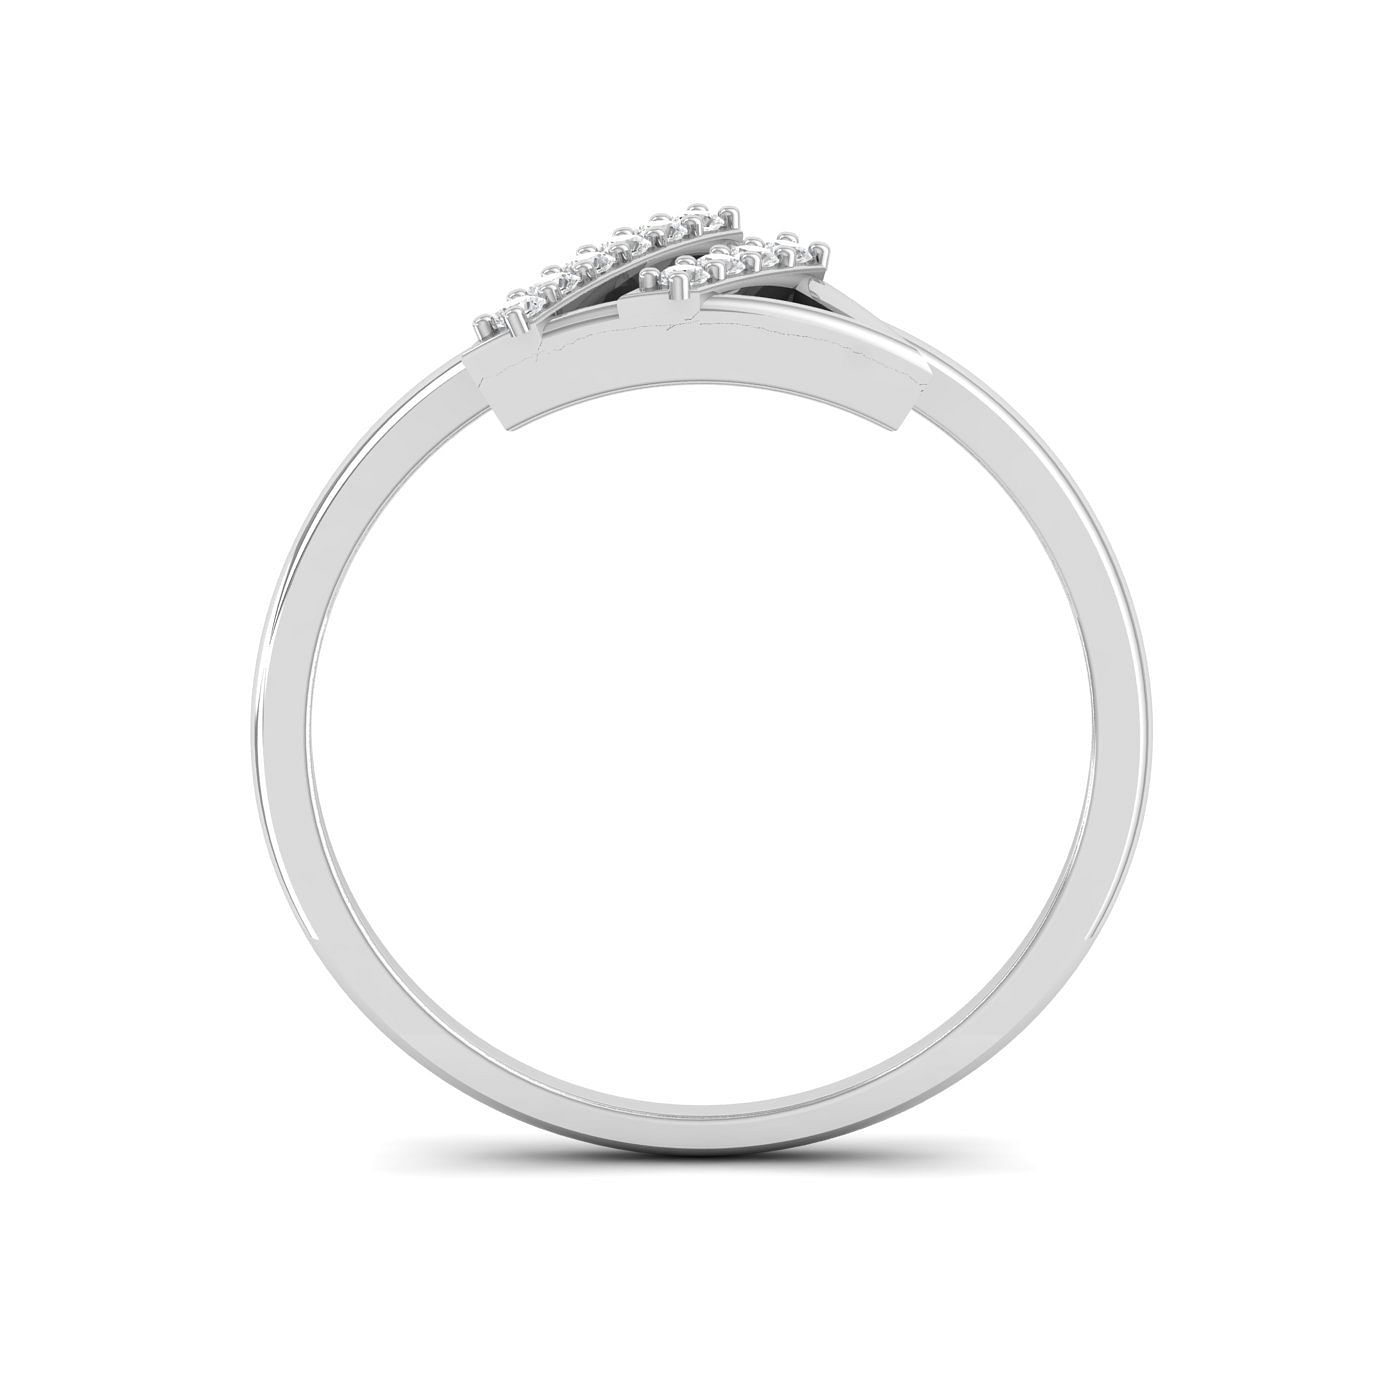 Dreieck Light weight Diamond Ring In White Gold